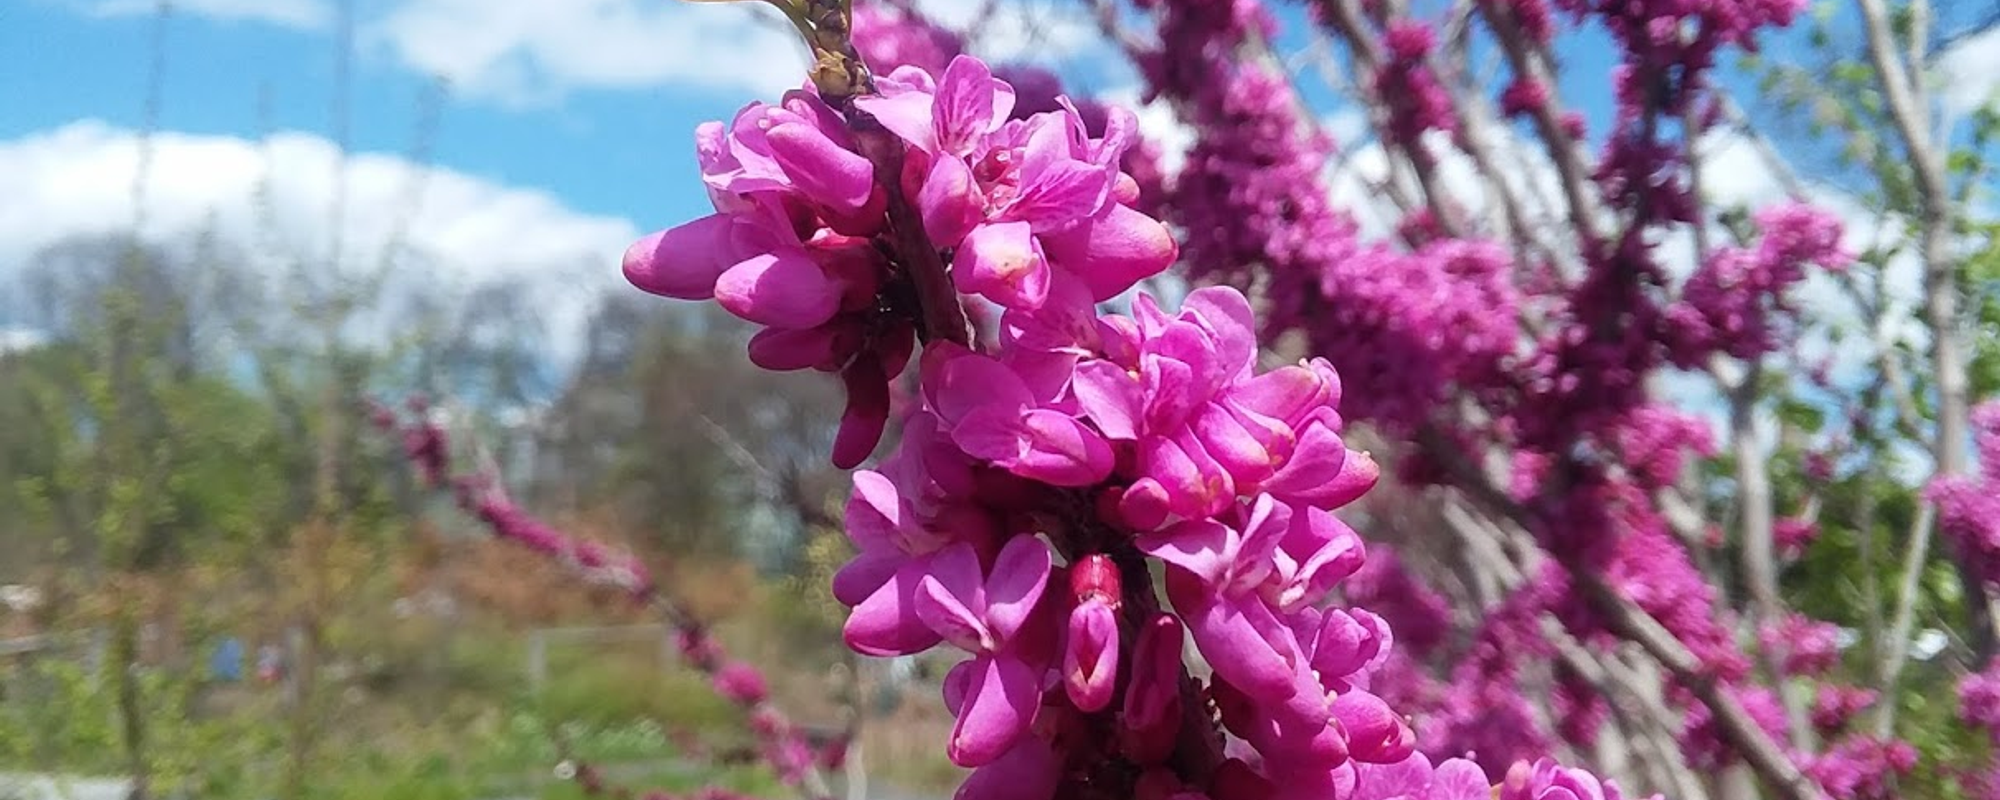 Sakura Matsuri: Cherry Blossom Festival @ The Brooklyn Botanic Garden